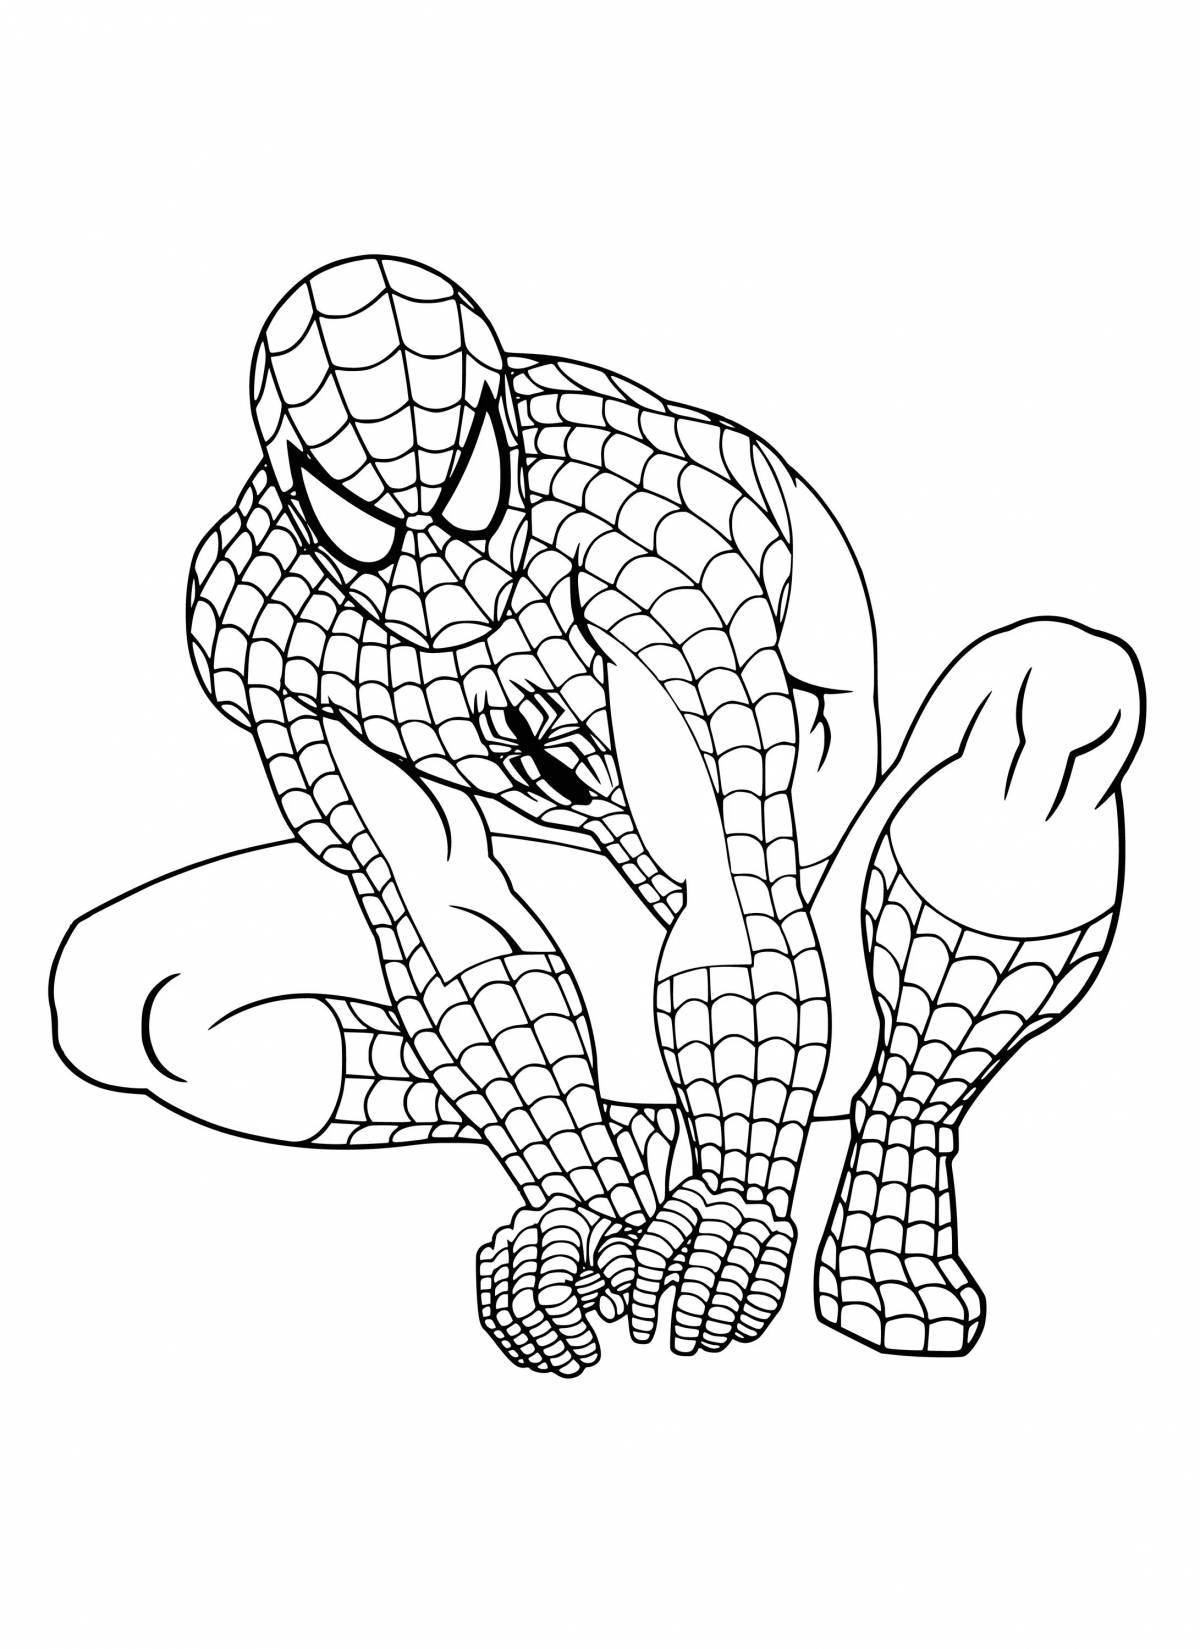 Brilliant spider-man coloring book